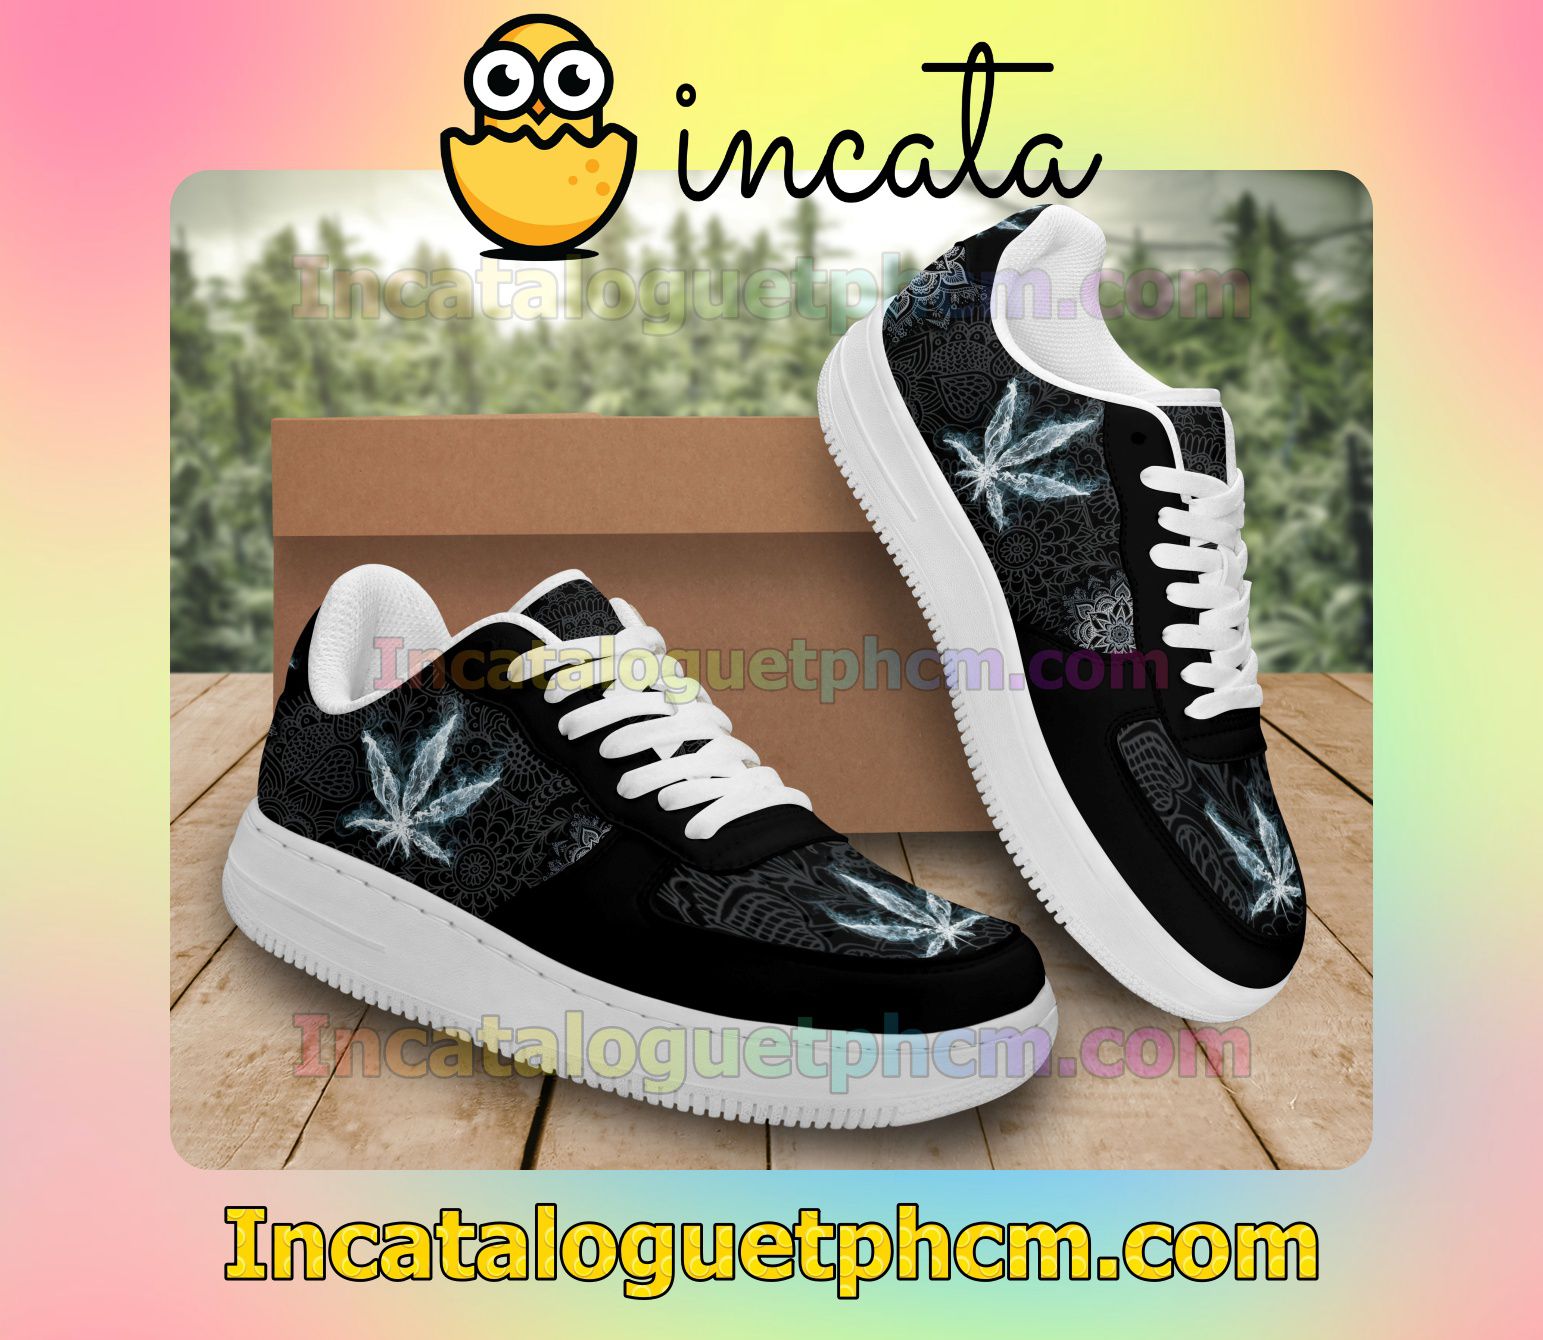 Great artwork! Mandala Smoking Cannabis Weed Nike Shoes Sneakers